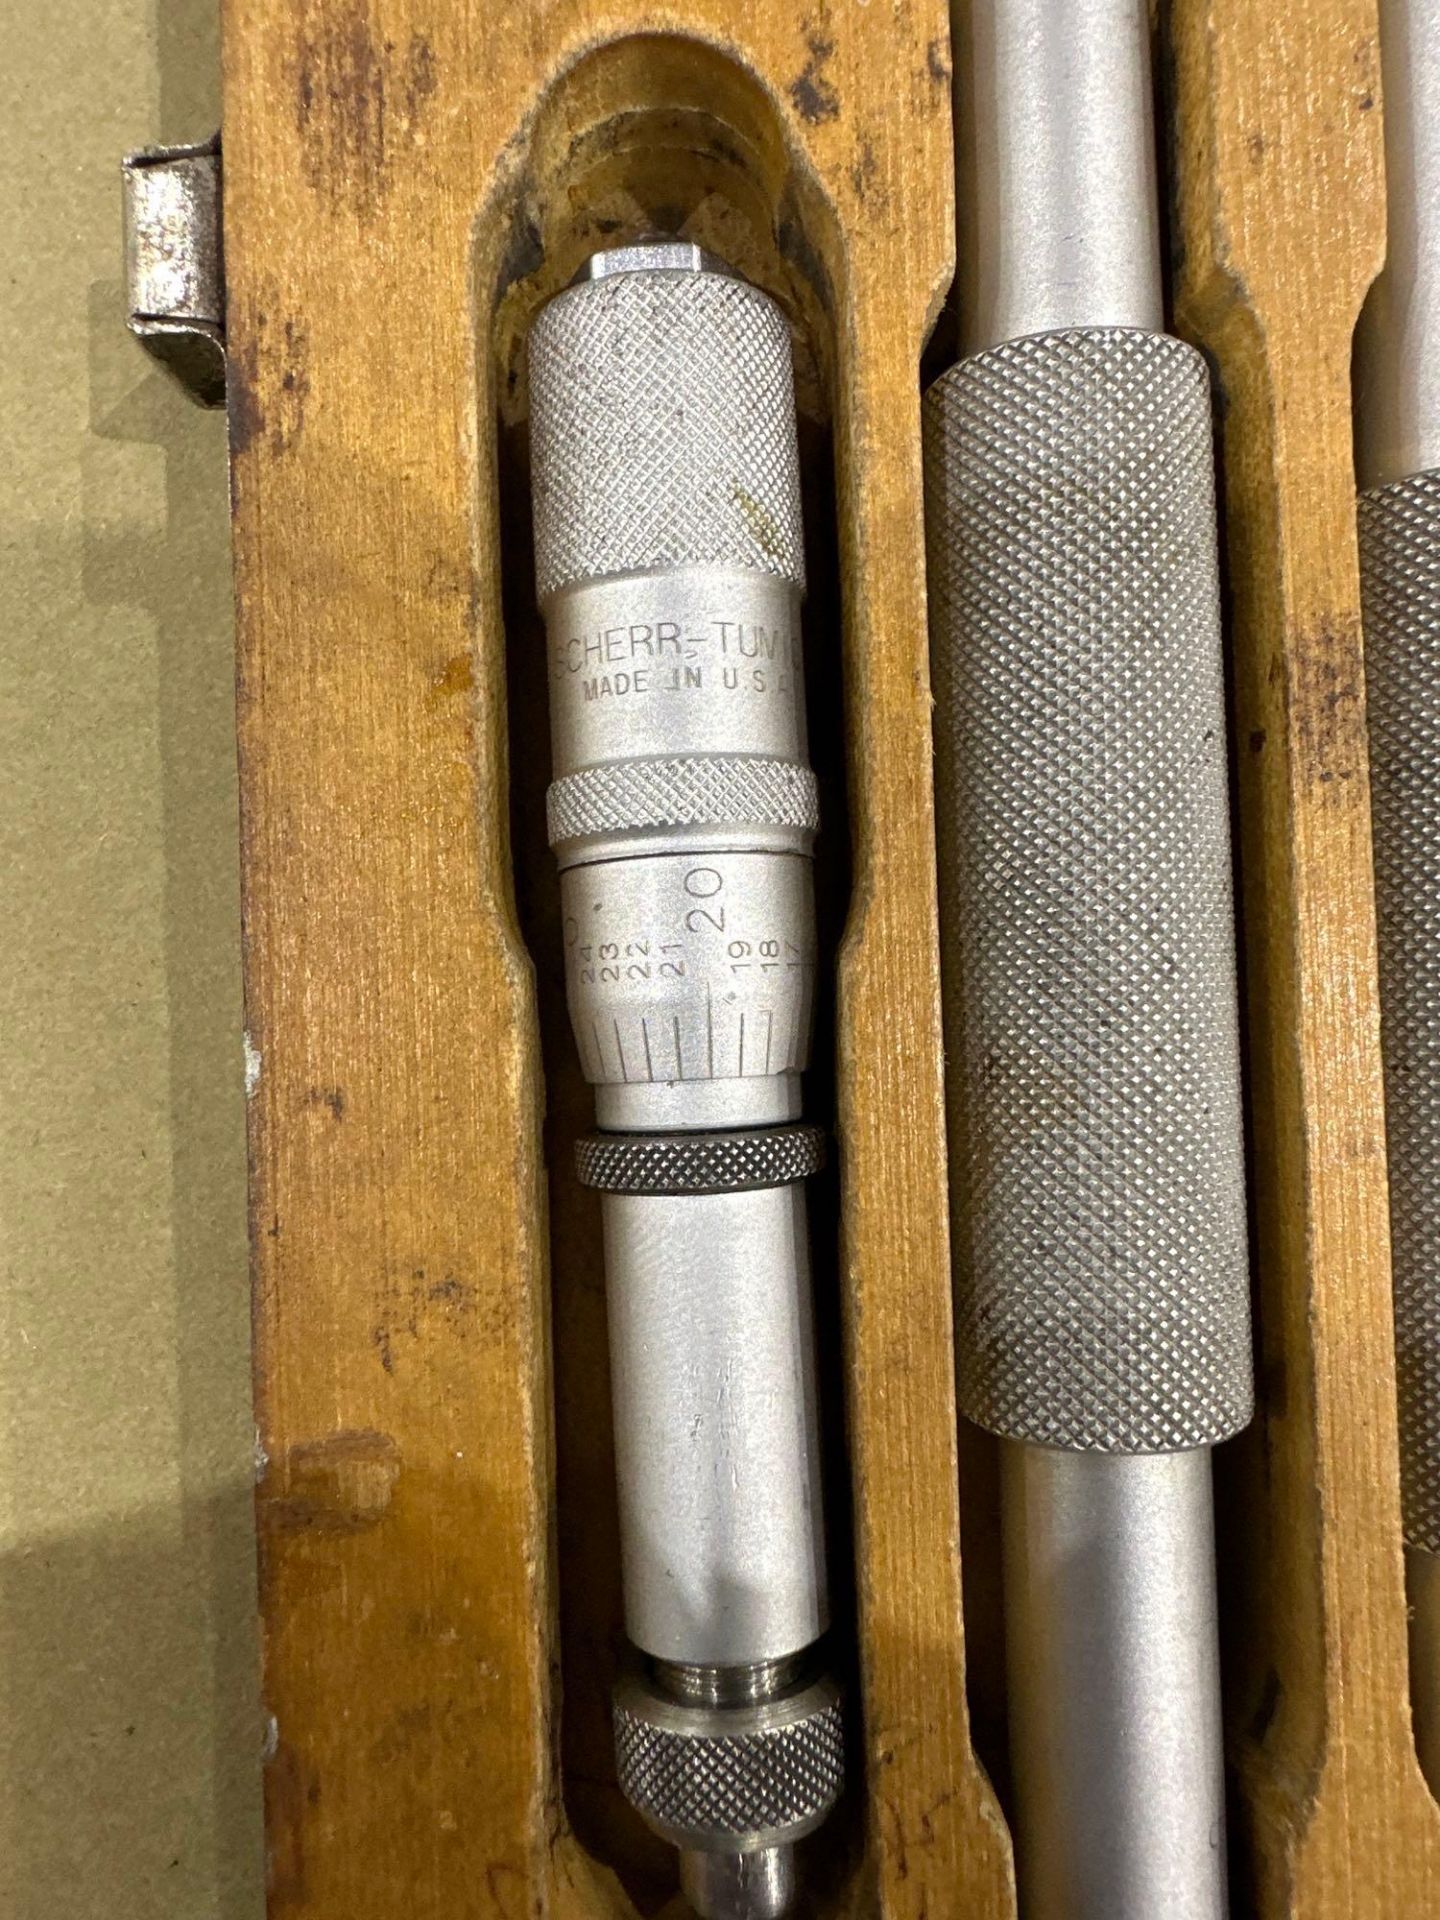 Lot of 2: (1) Starrett Blade Micrometer No. 486, (1) Scherr-Tumico Tubular Inside Micrometer 4-40" - Image 7 of 10